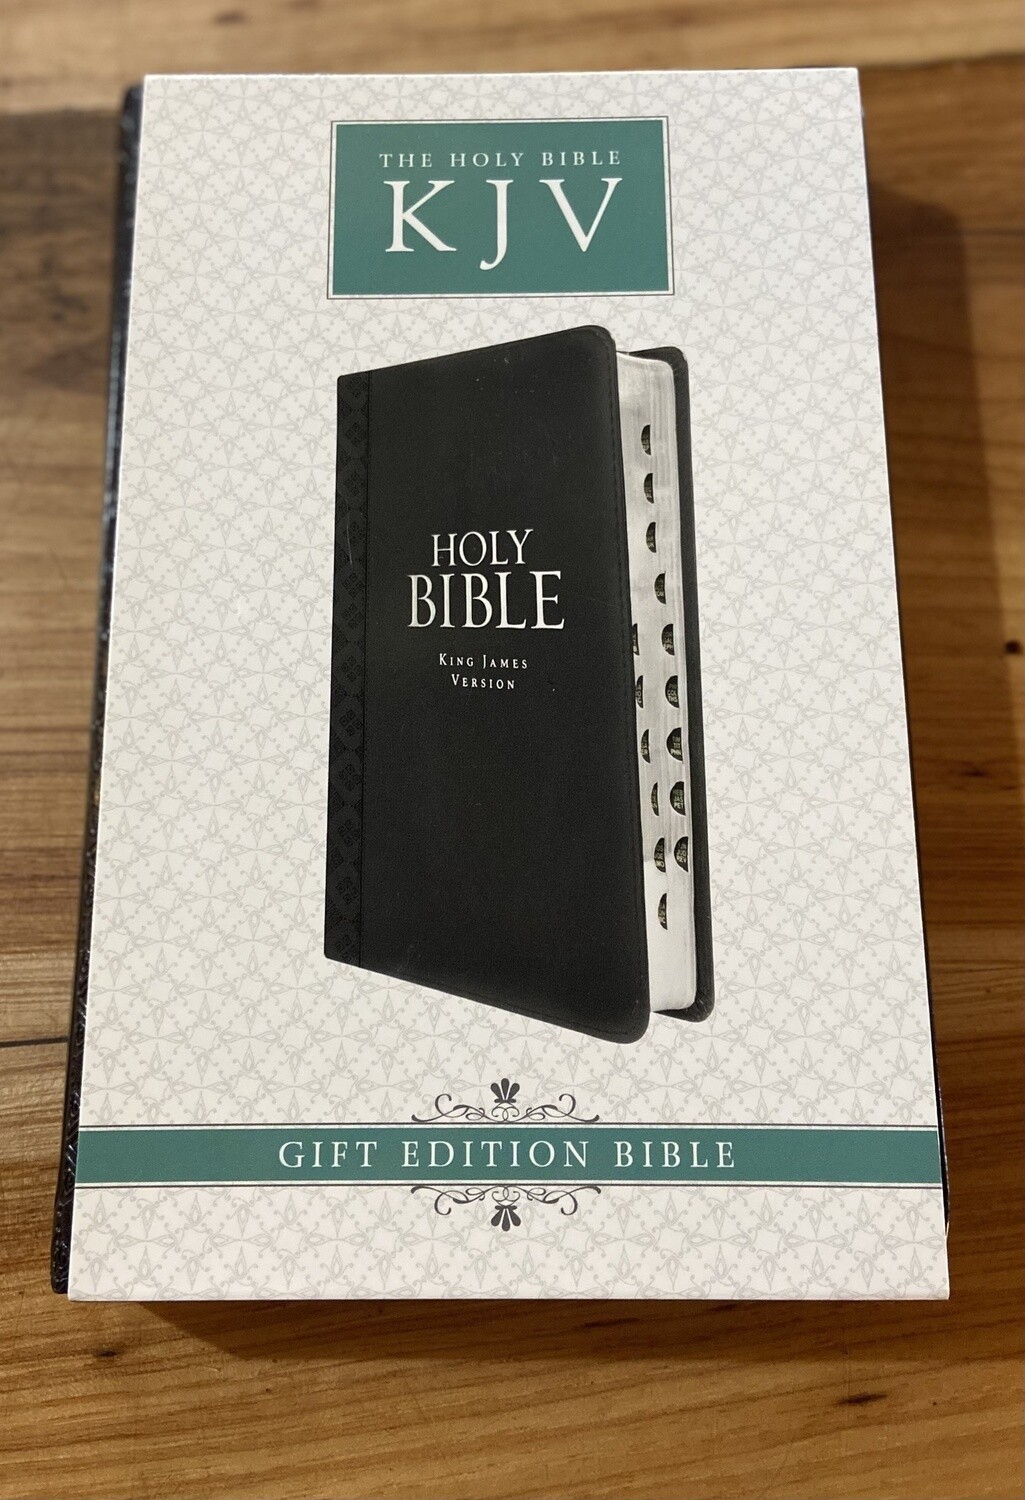 The Holy Bible: KJV Gift Edition Bible